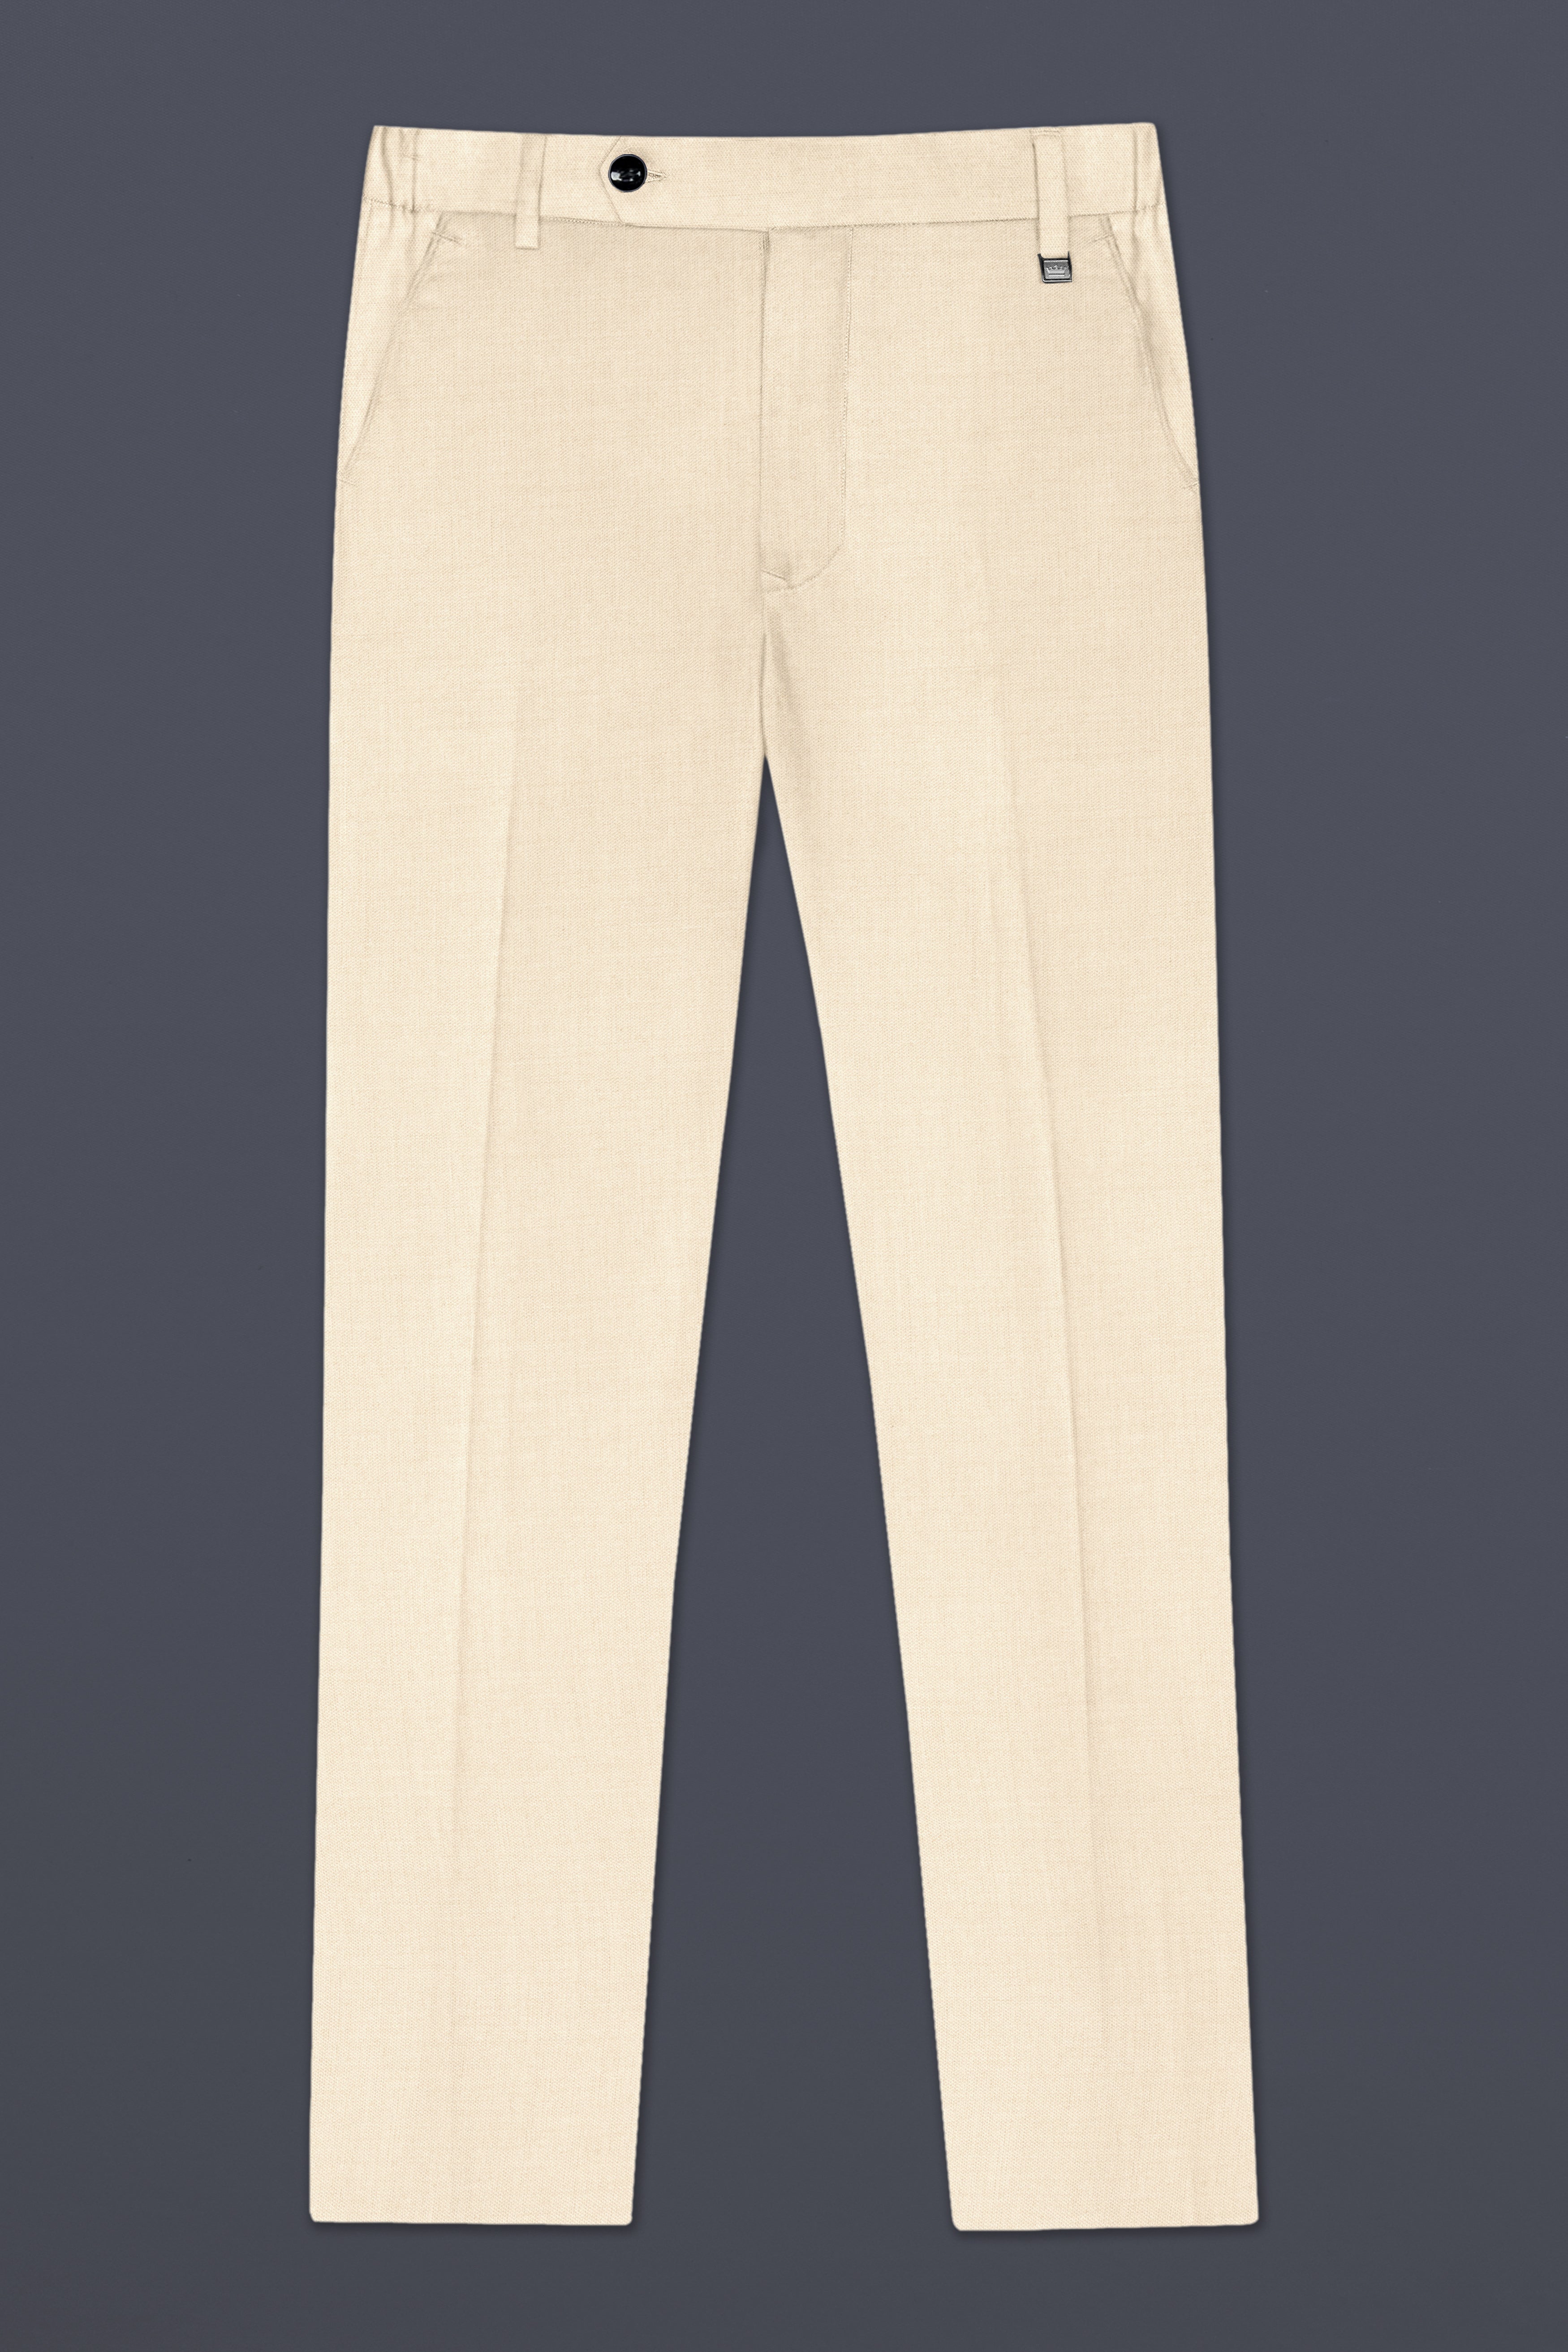 Mercury Cream Bandhgala Suit